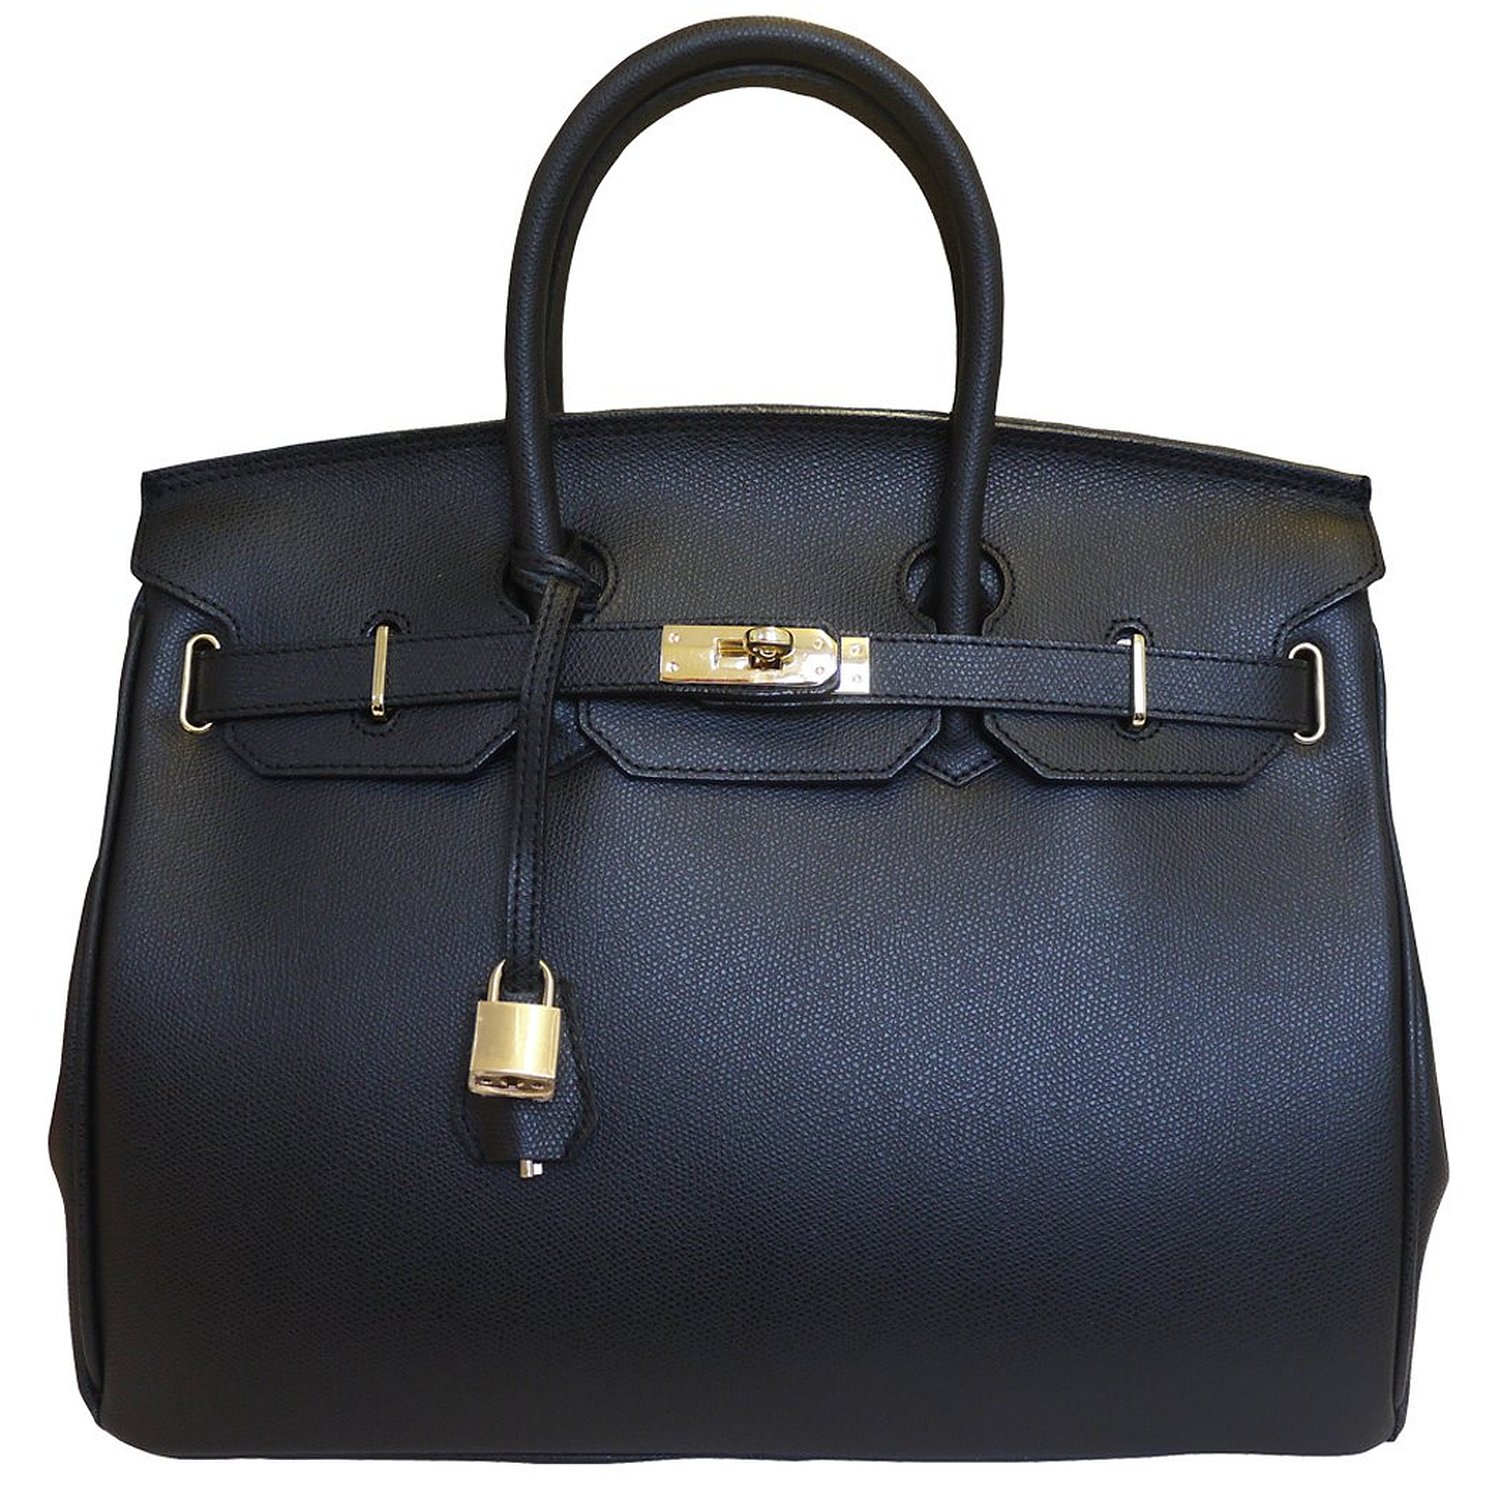 Carbotti Birkin Inspired Style Classico Leather Handbag 35cm Black